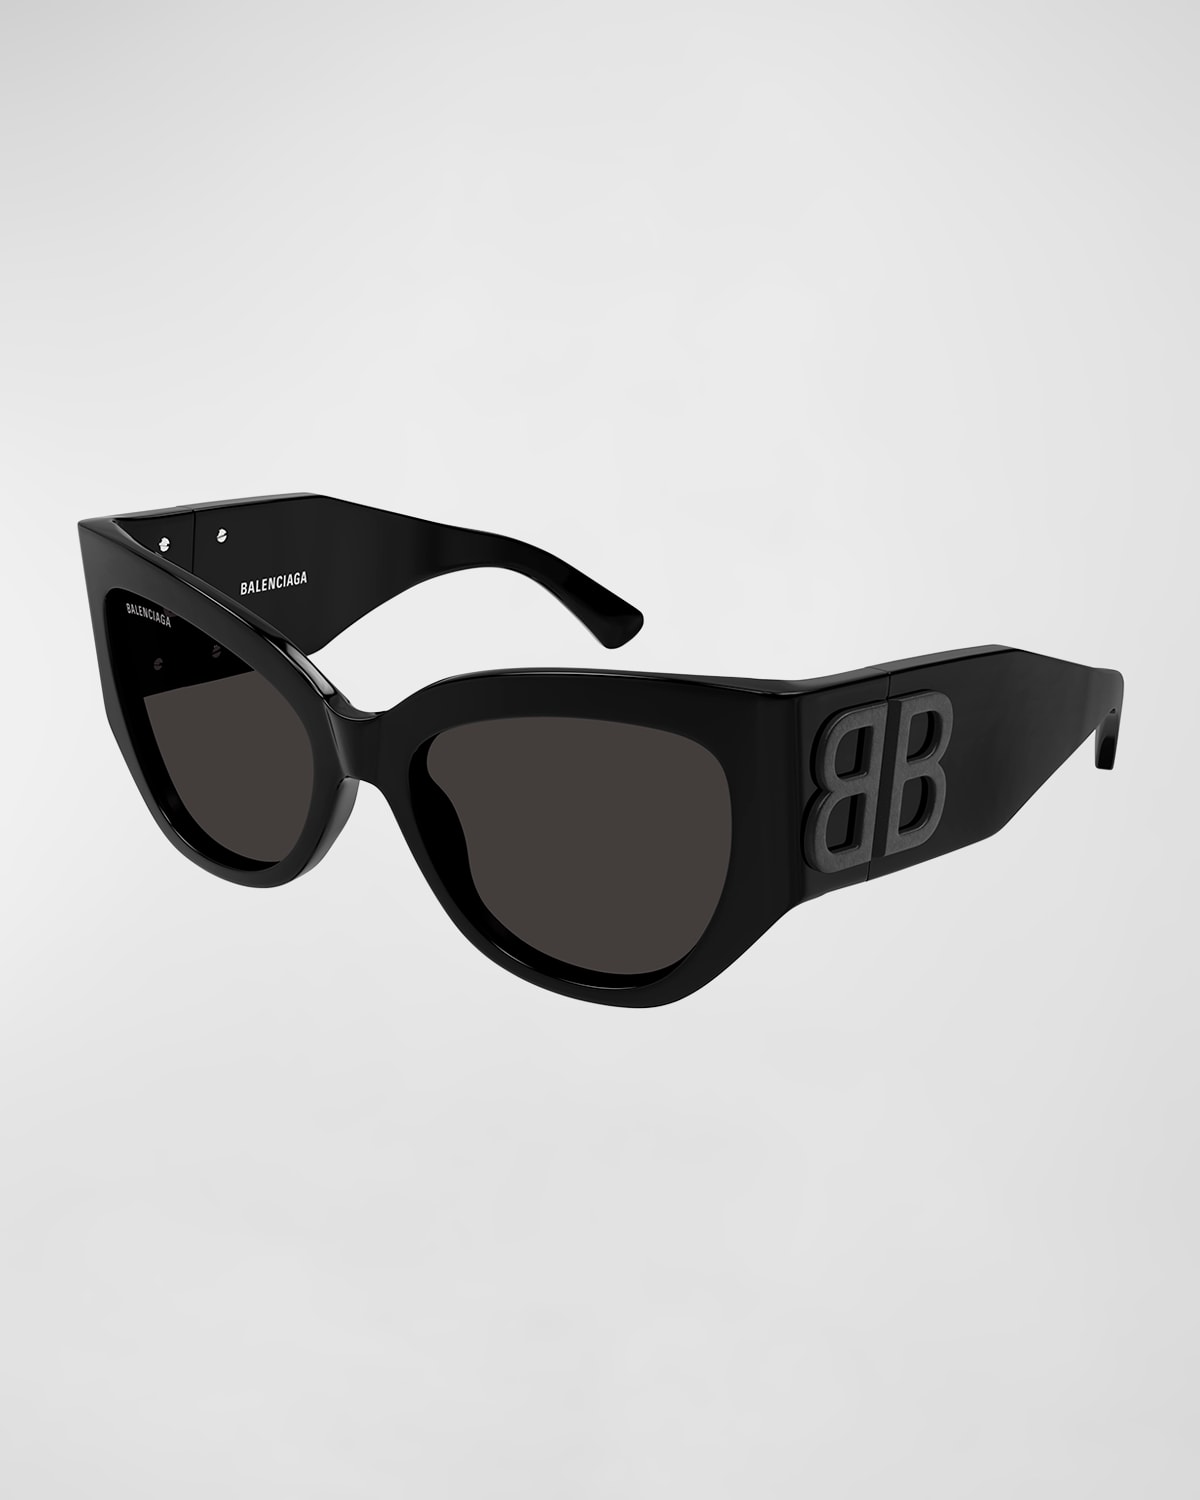 BB Monochrome Acetate Butterfly Sunglasses